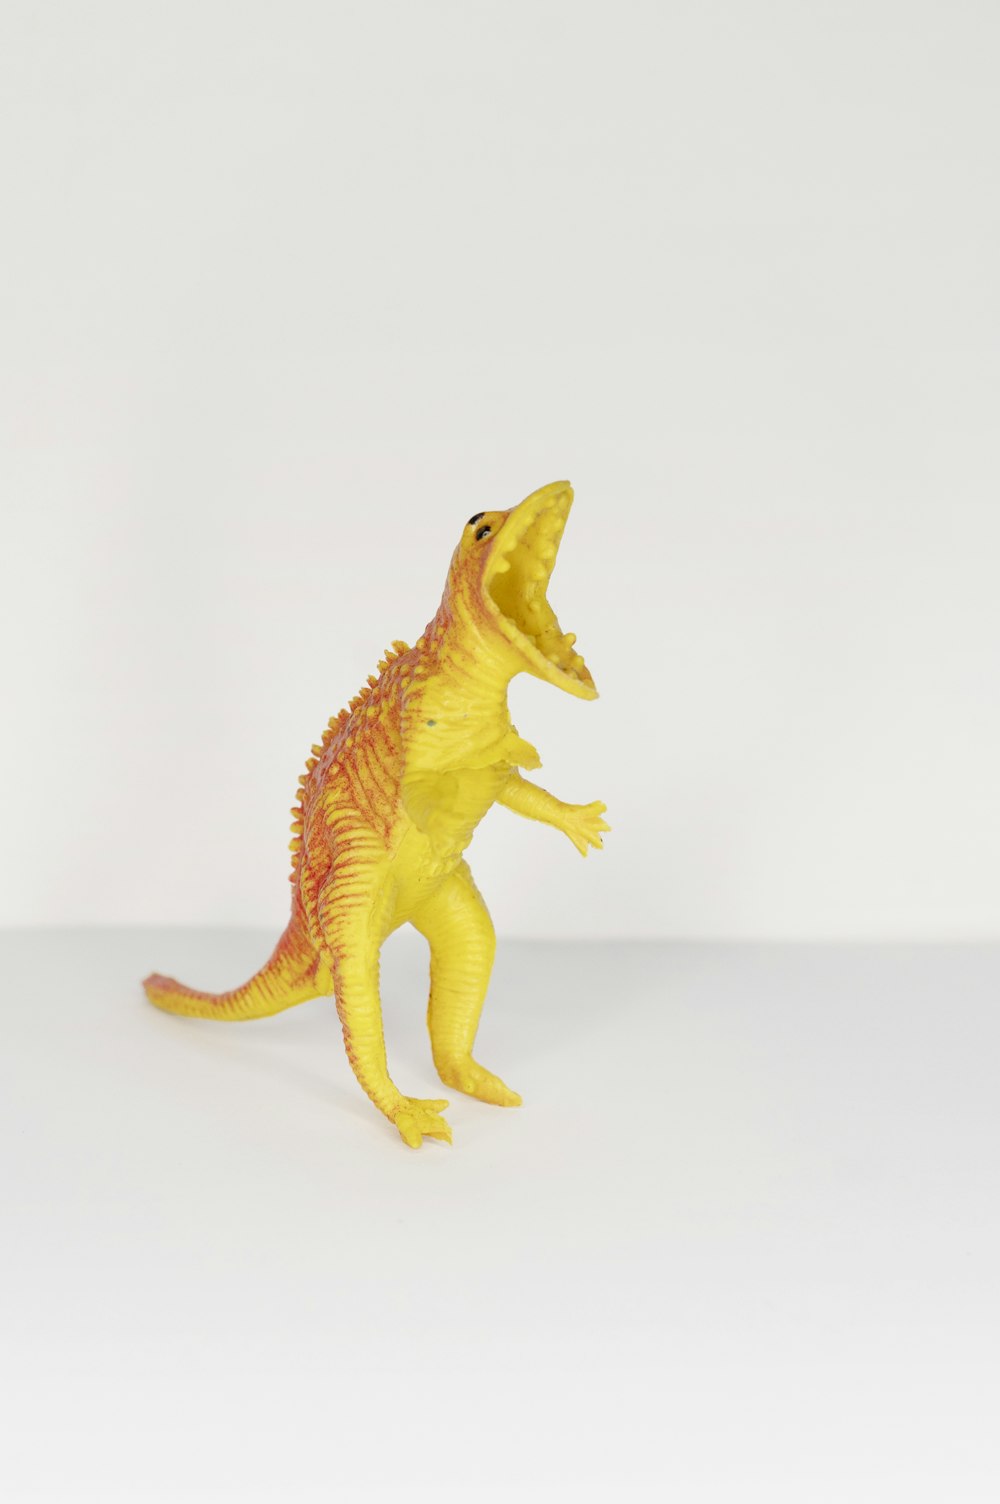 yellow and orange dinosaur toy